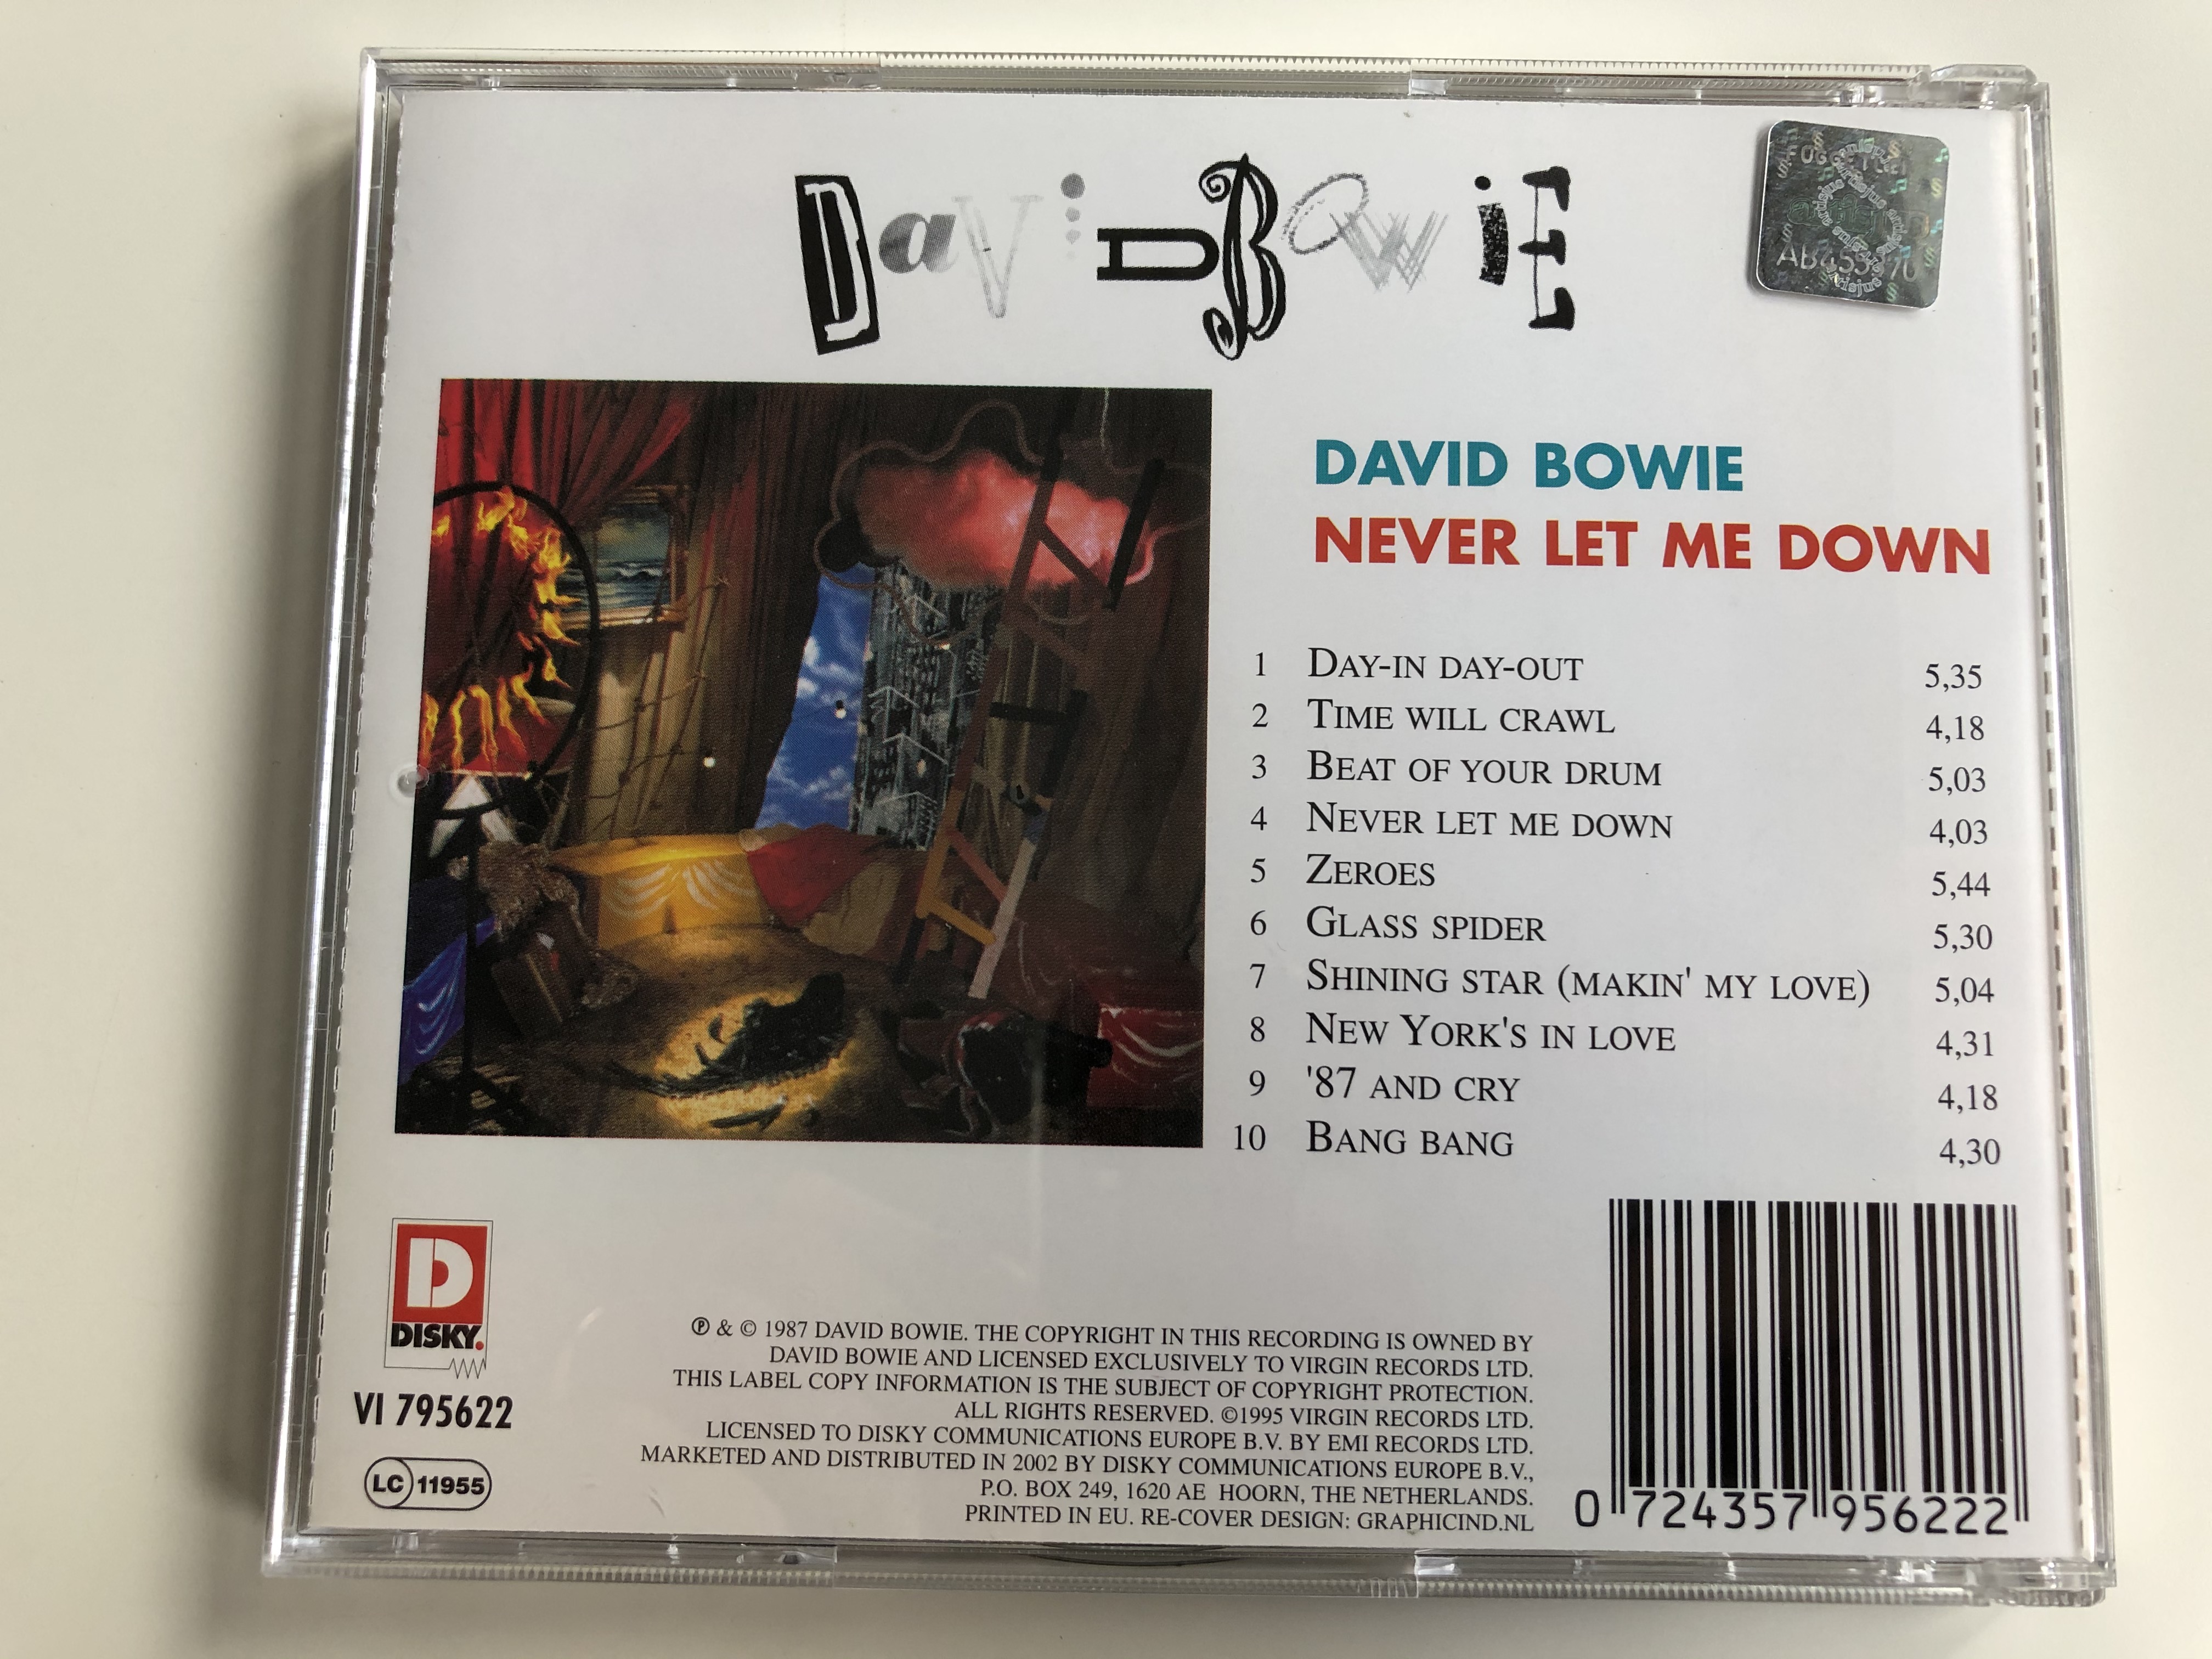 david-bowie-never-let-me-down-disky-audio-cd-2002-vi-795622-6-.jpg